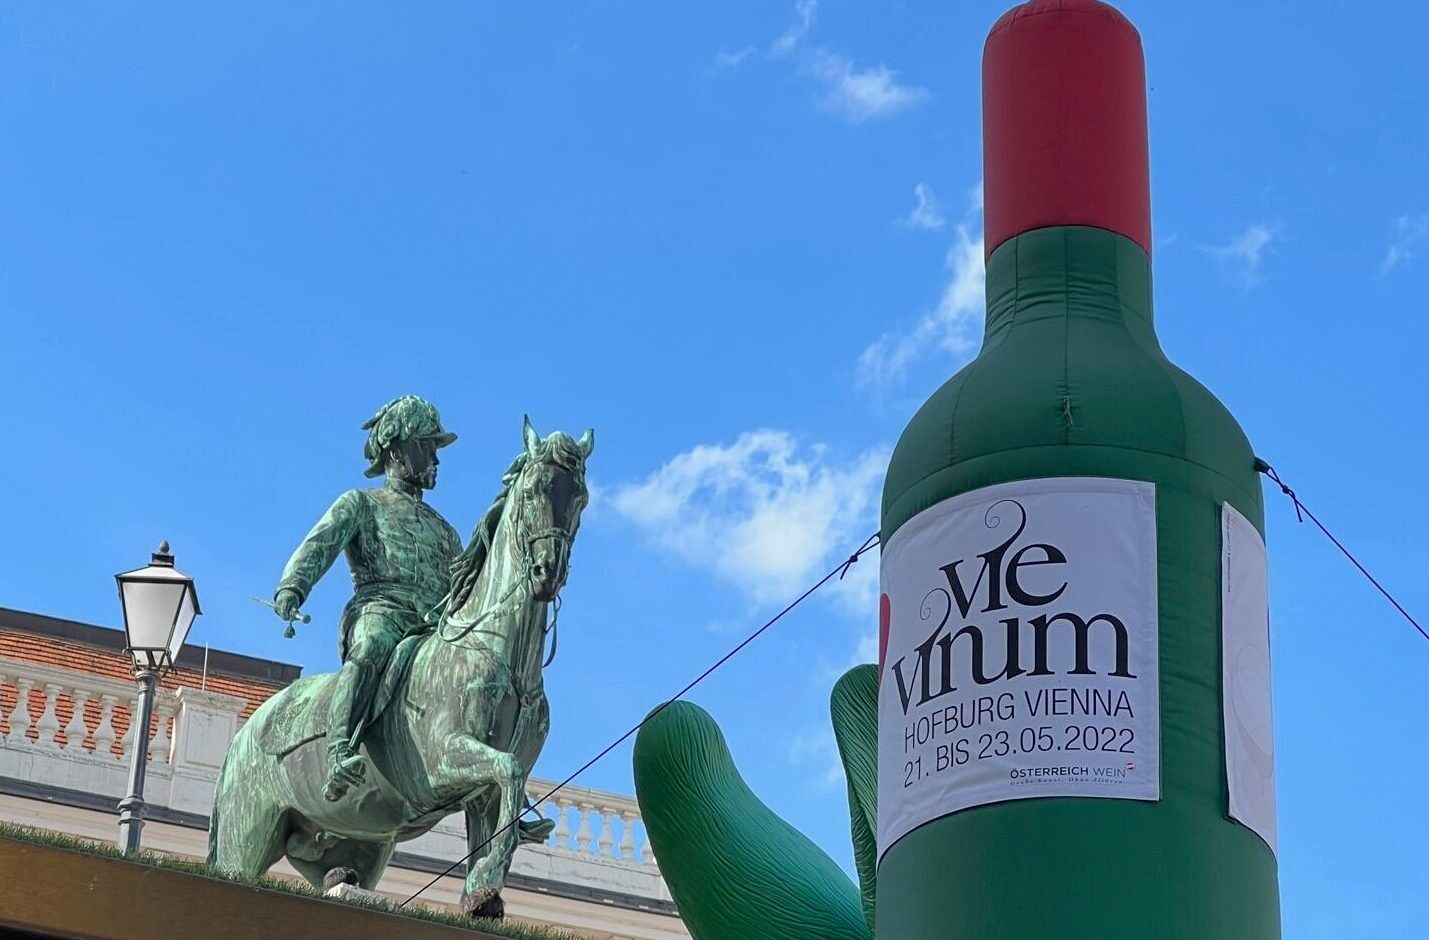 VieVinum 2022 sees Austrian Wine draw a line under Covid